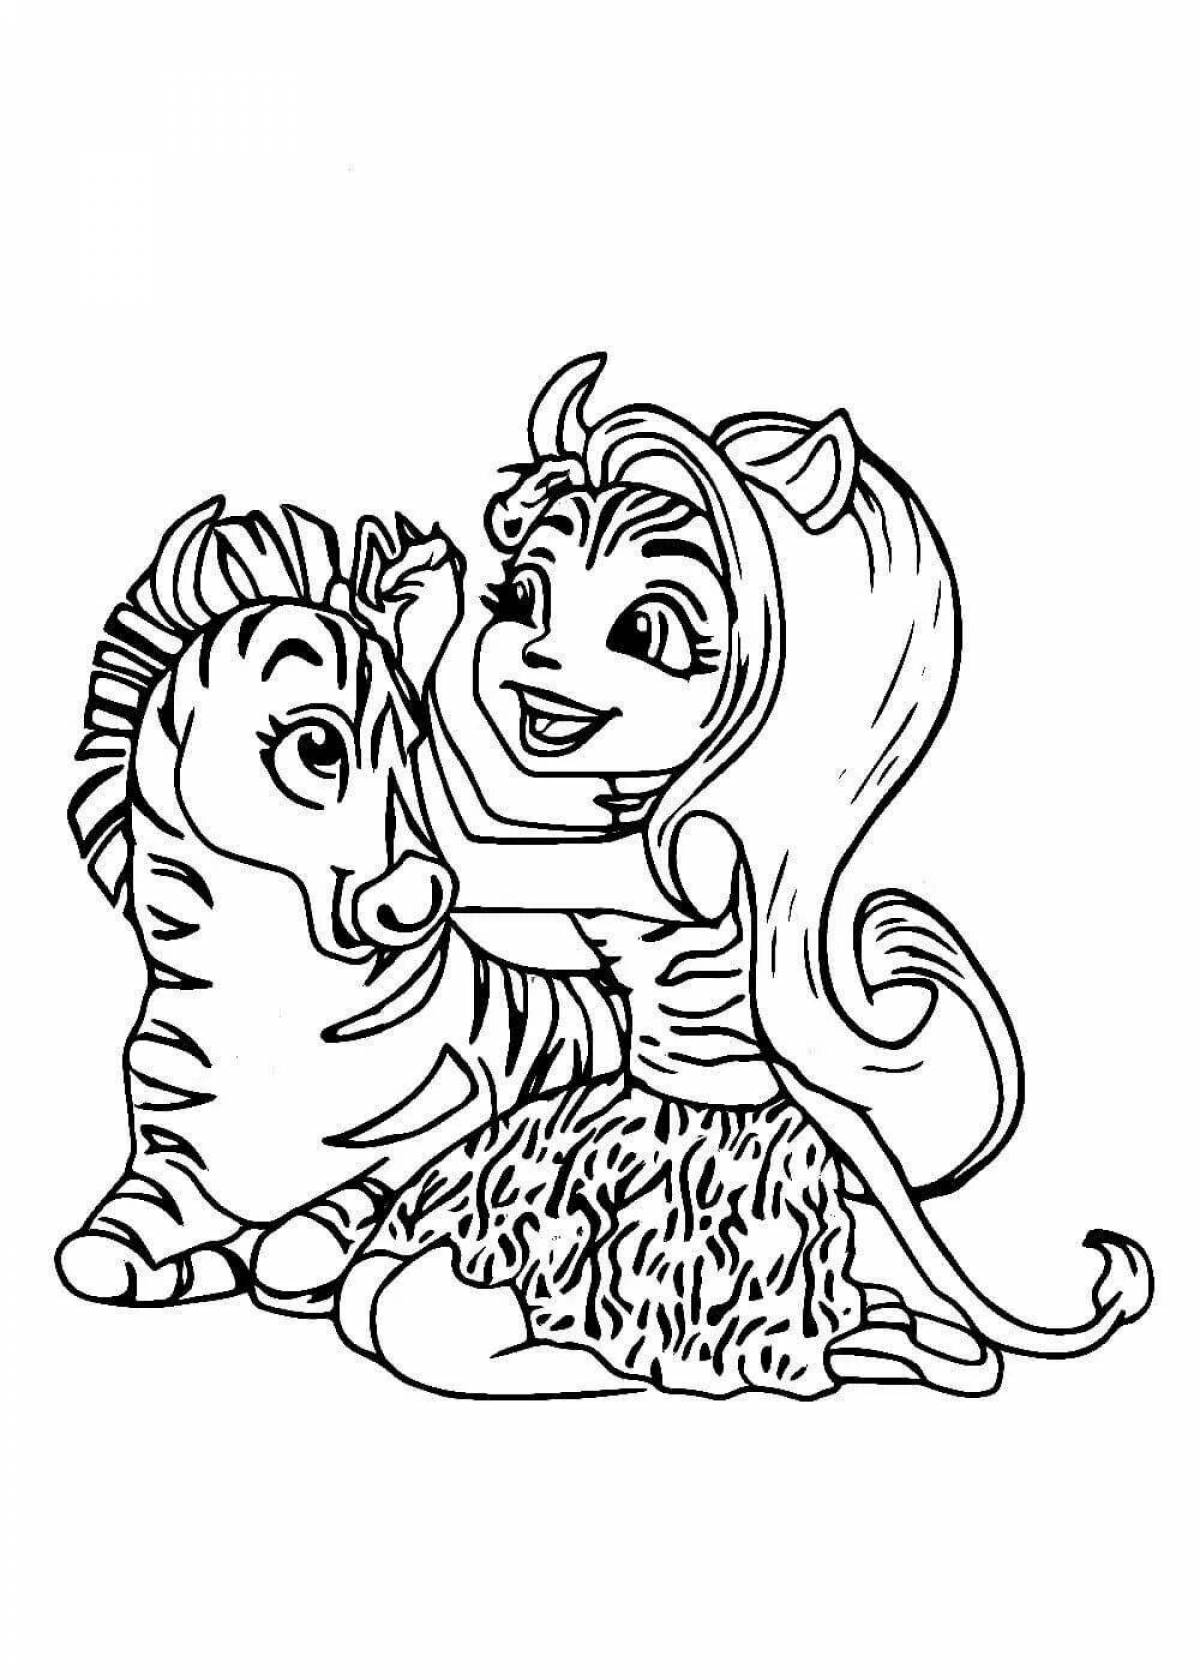 Sweet enchantimals tiger coloring page